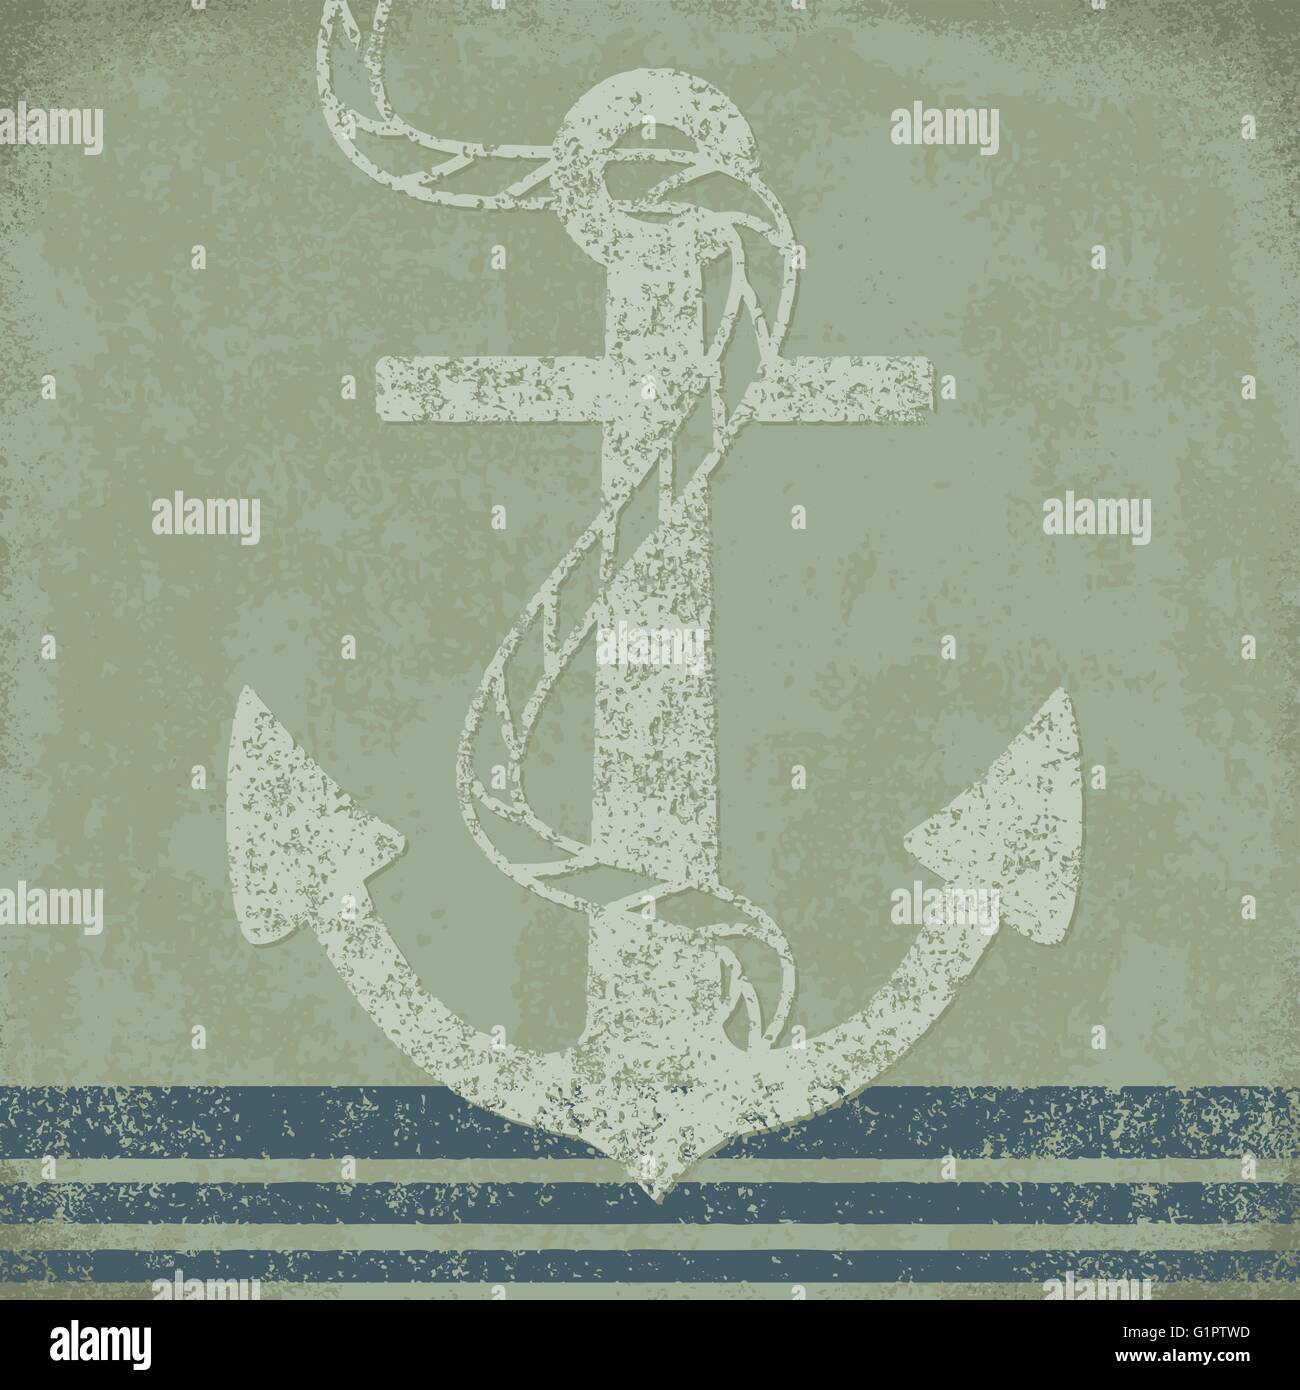 Anchor on grunge background vintage vector illustration 1 Stock Vector ...